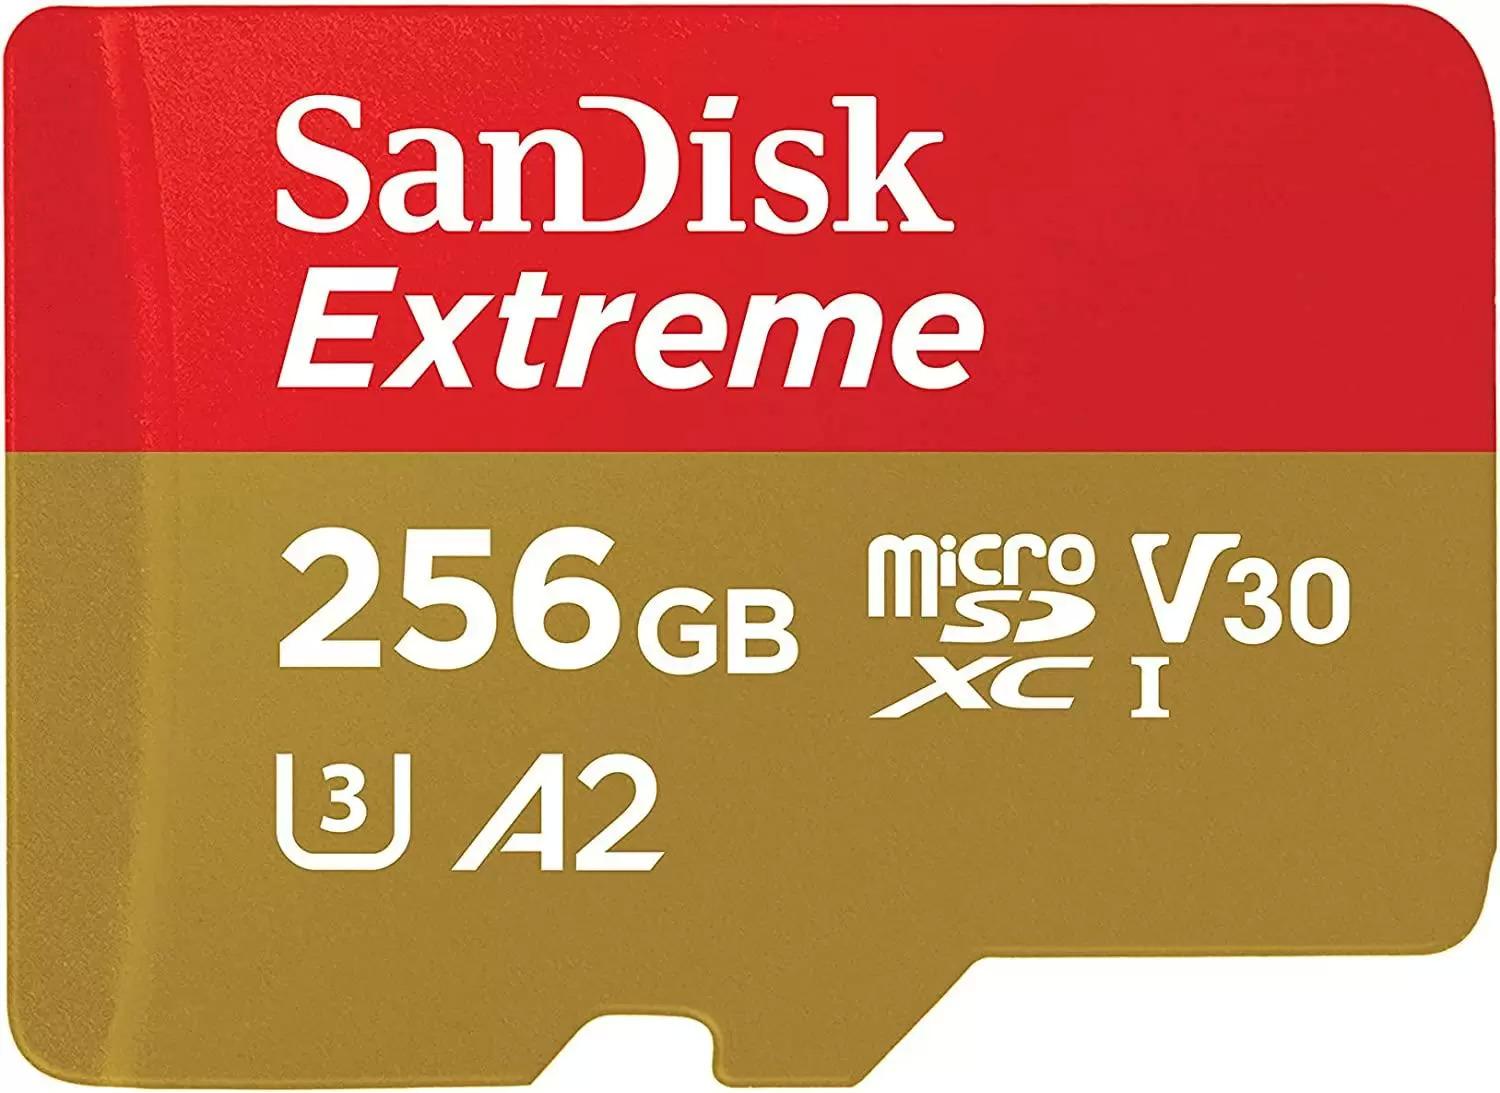 256GB SanDisk Extreme microSDXC UHS-I Memory Card for $24.85